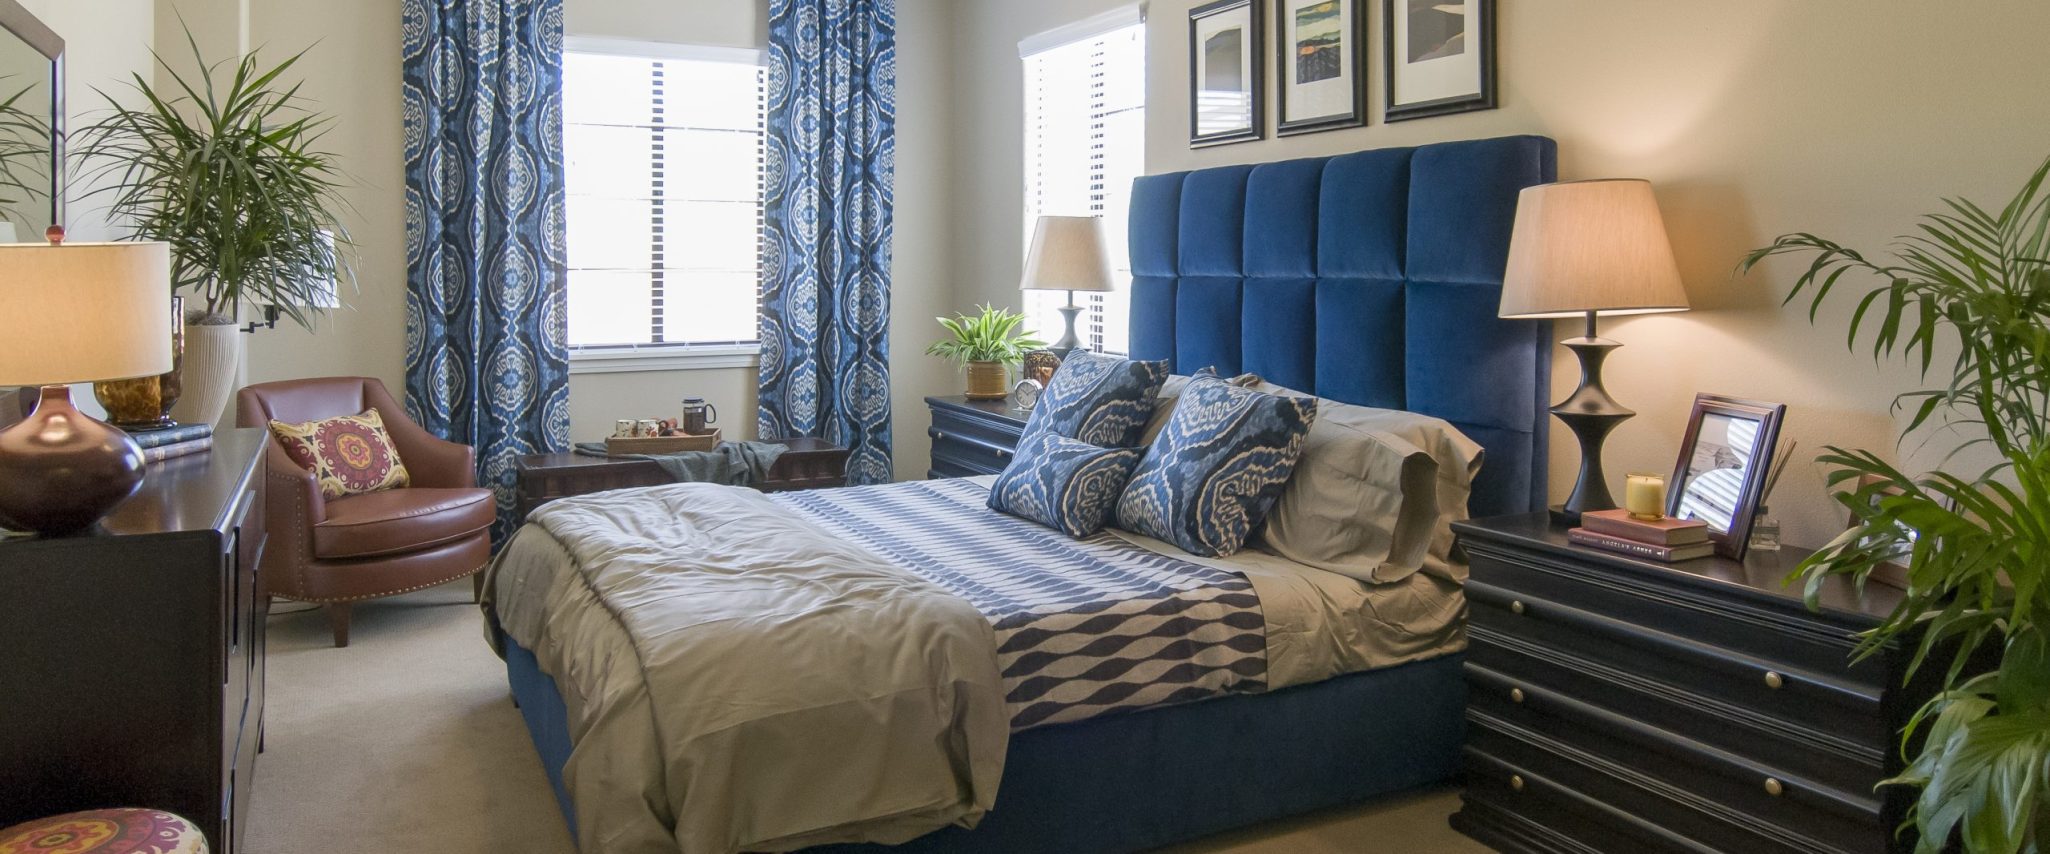 Senior Living Floor Plans Villa Hermosa in Tucson AZ